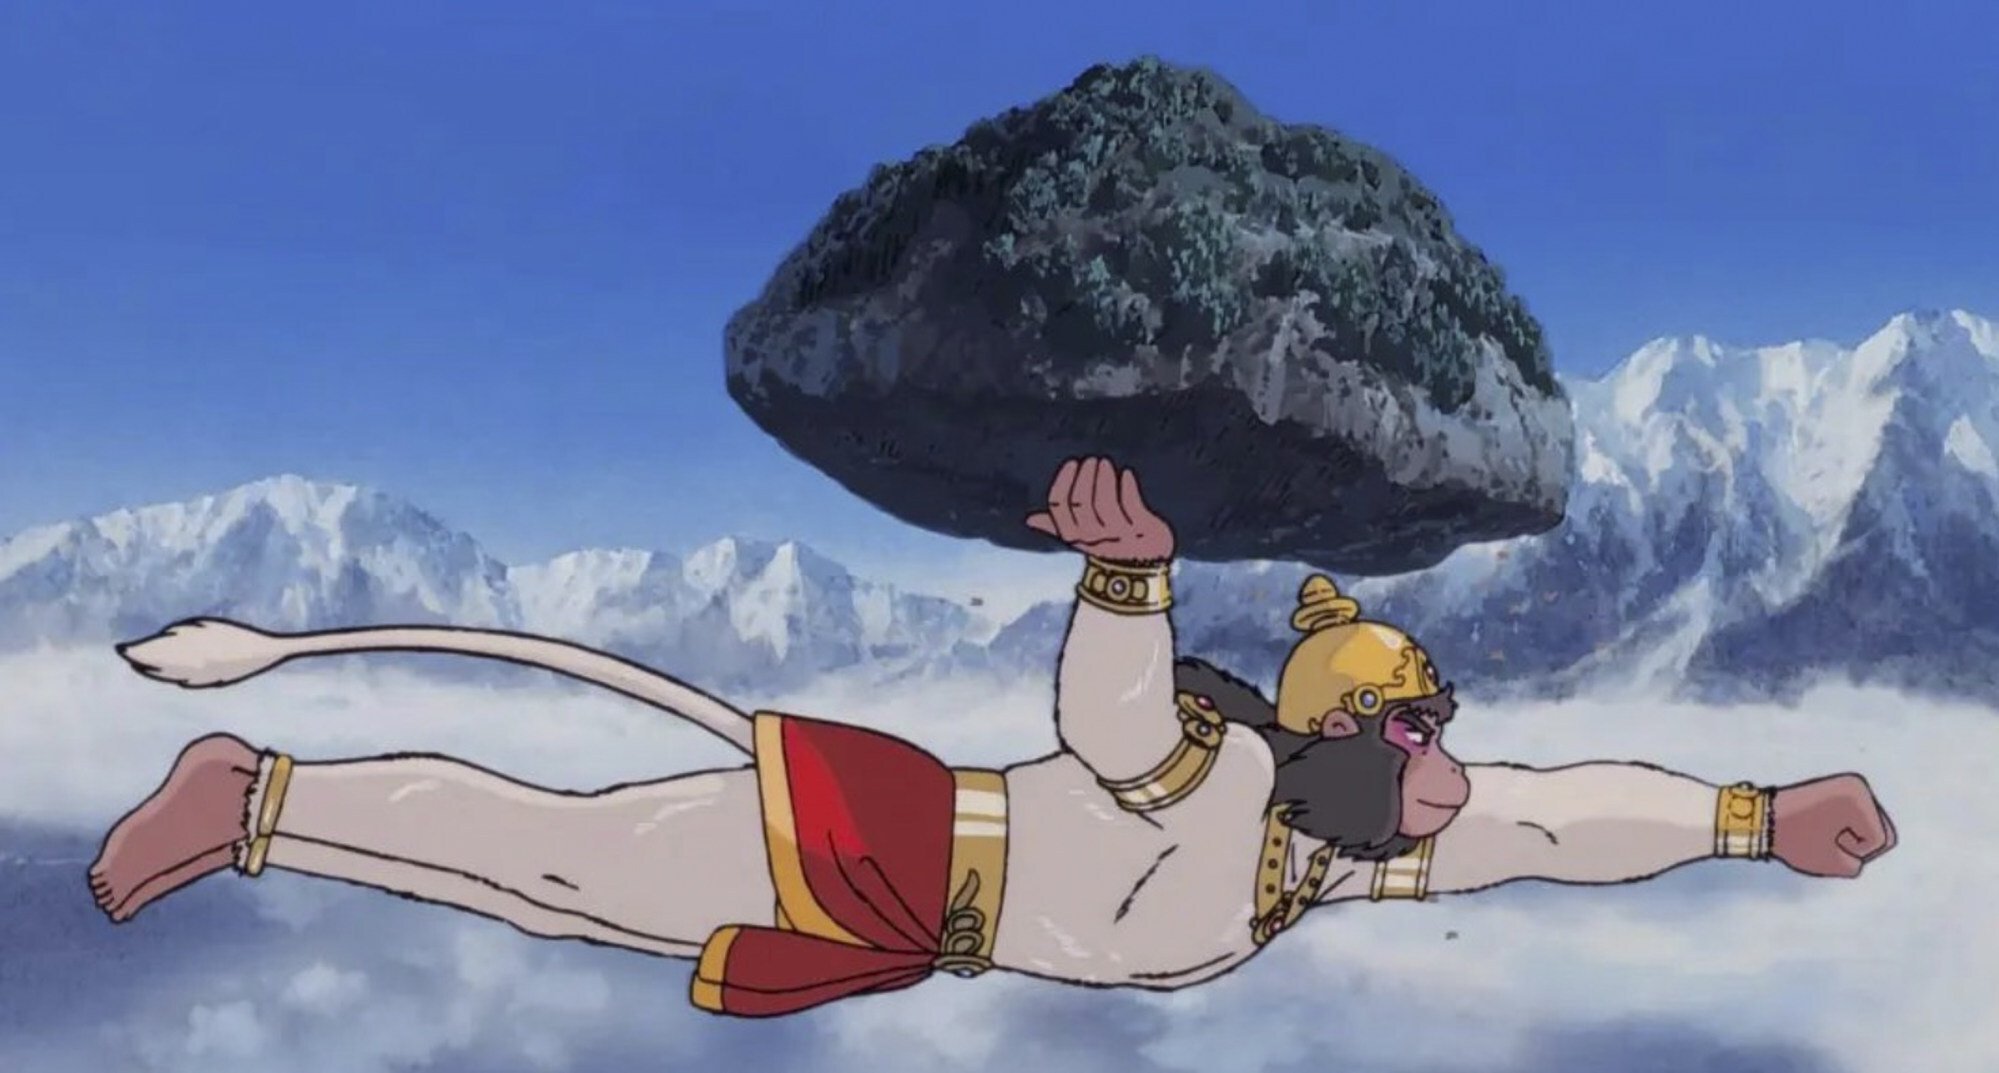 Anime Review: Ramayana: The Legend of Prince Rama (1992) by Ram Mohan, Yugo  Sako